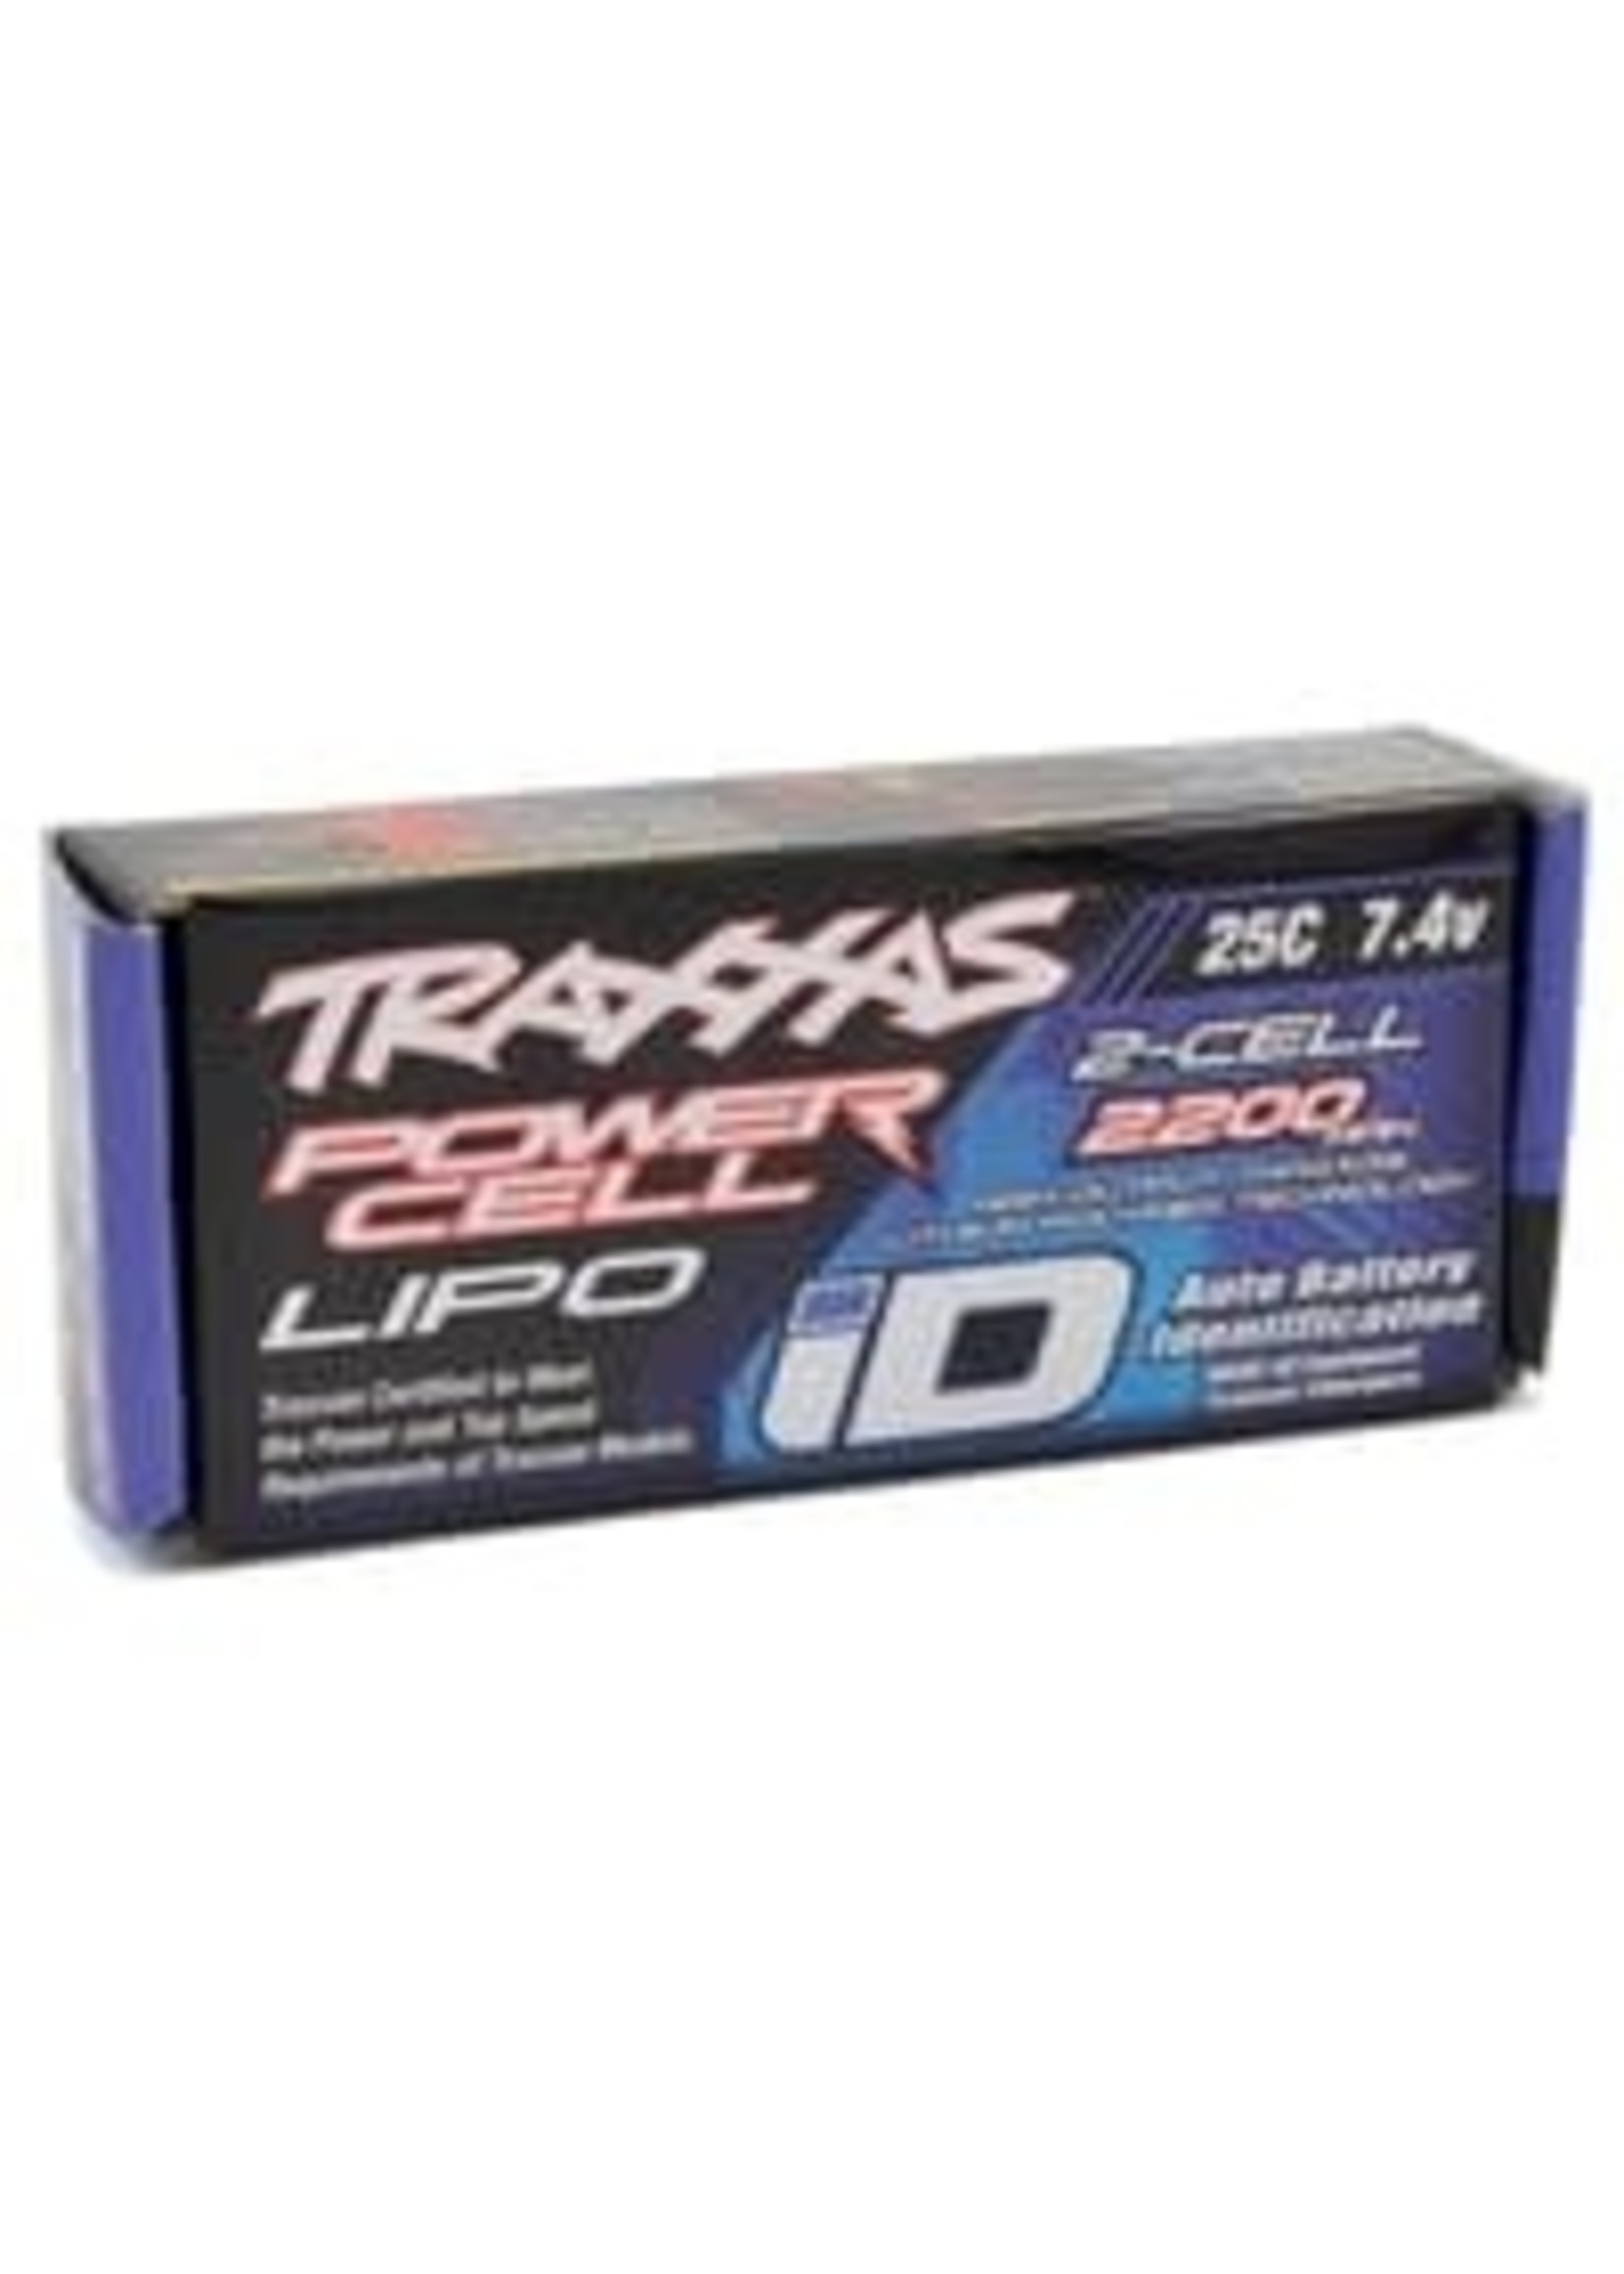 Traxxas 2820X 2200mAh 7.4v 2-Cell 25C LiPo Battery